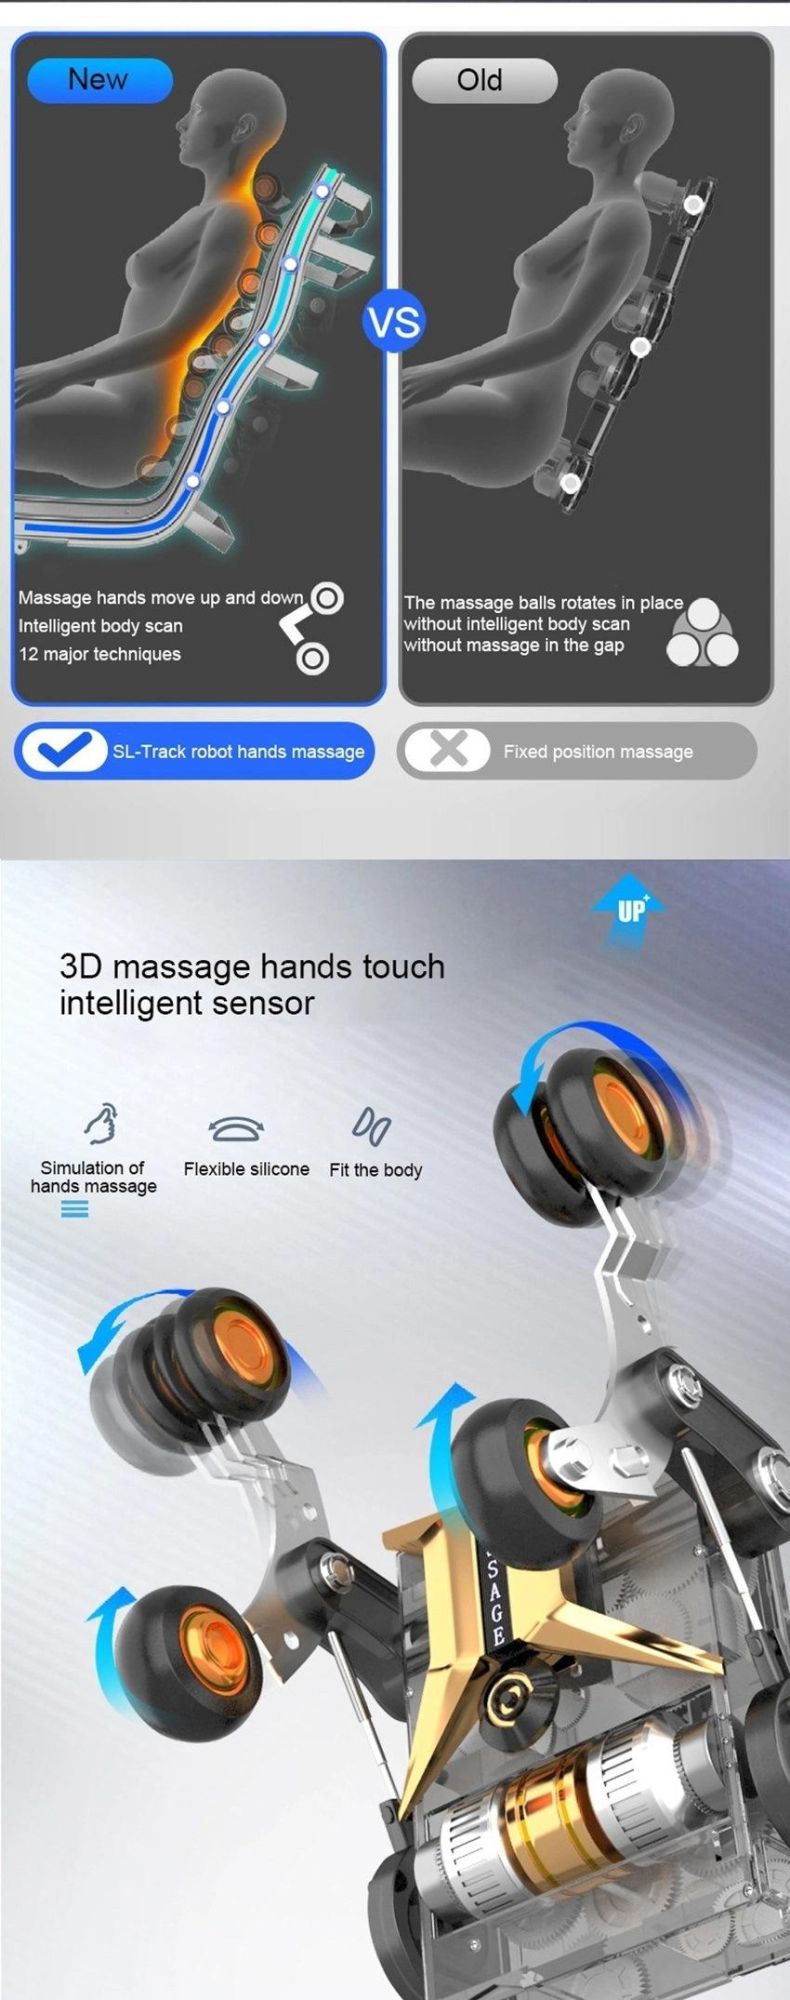 2022 New AI Voice Control SL Super Long Track Massage Full Body Type Body Care